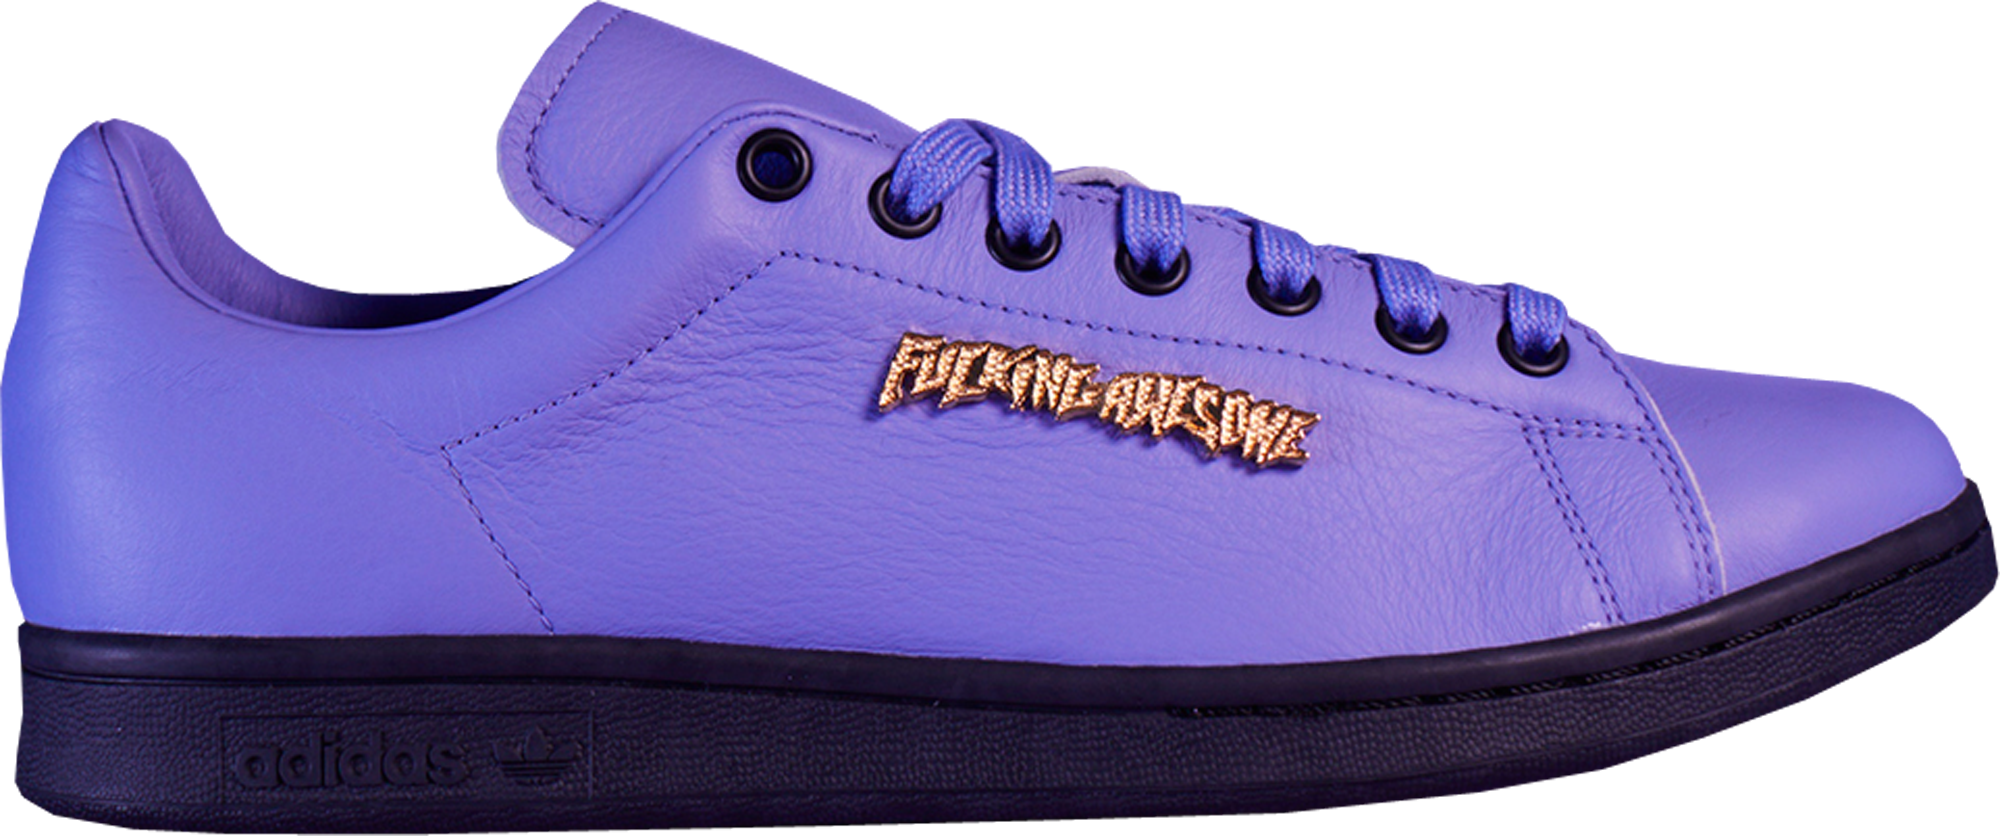 purple stan smith adidas